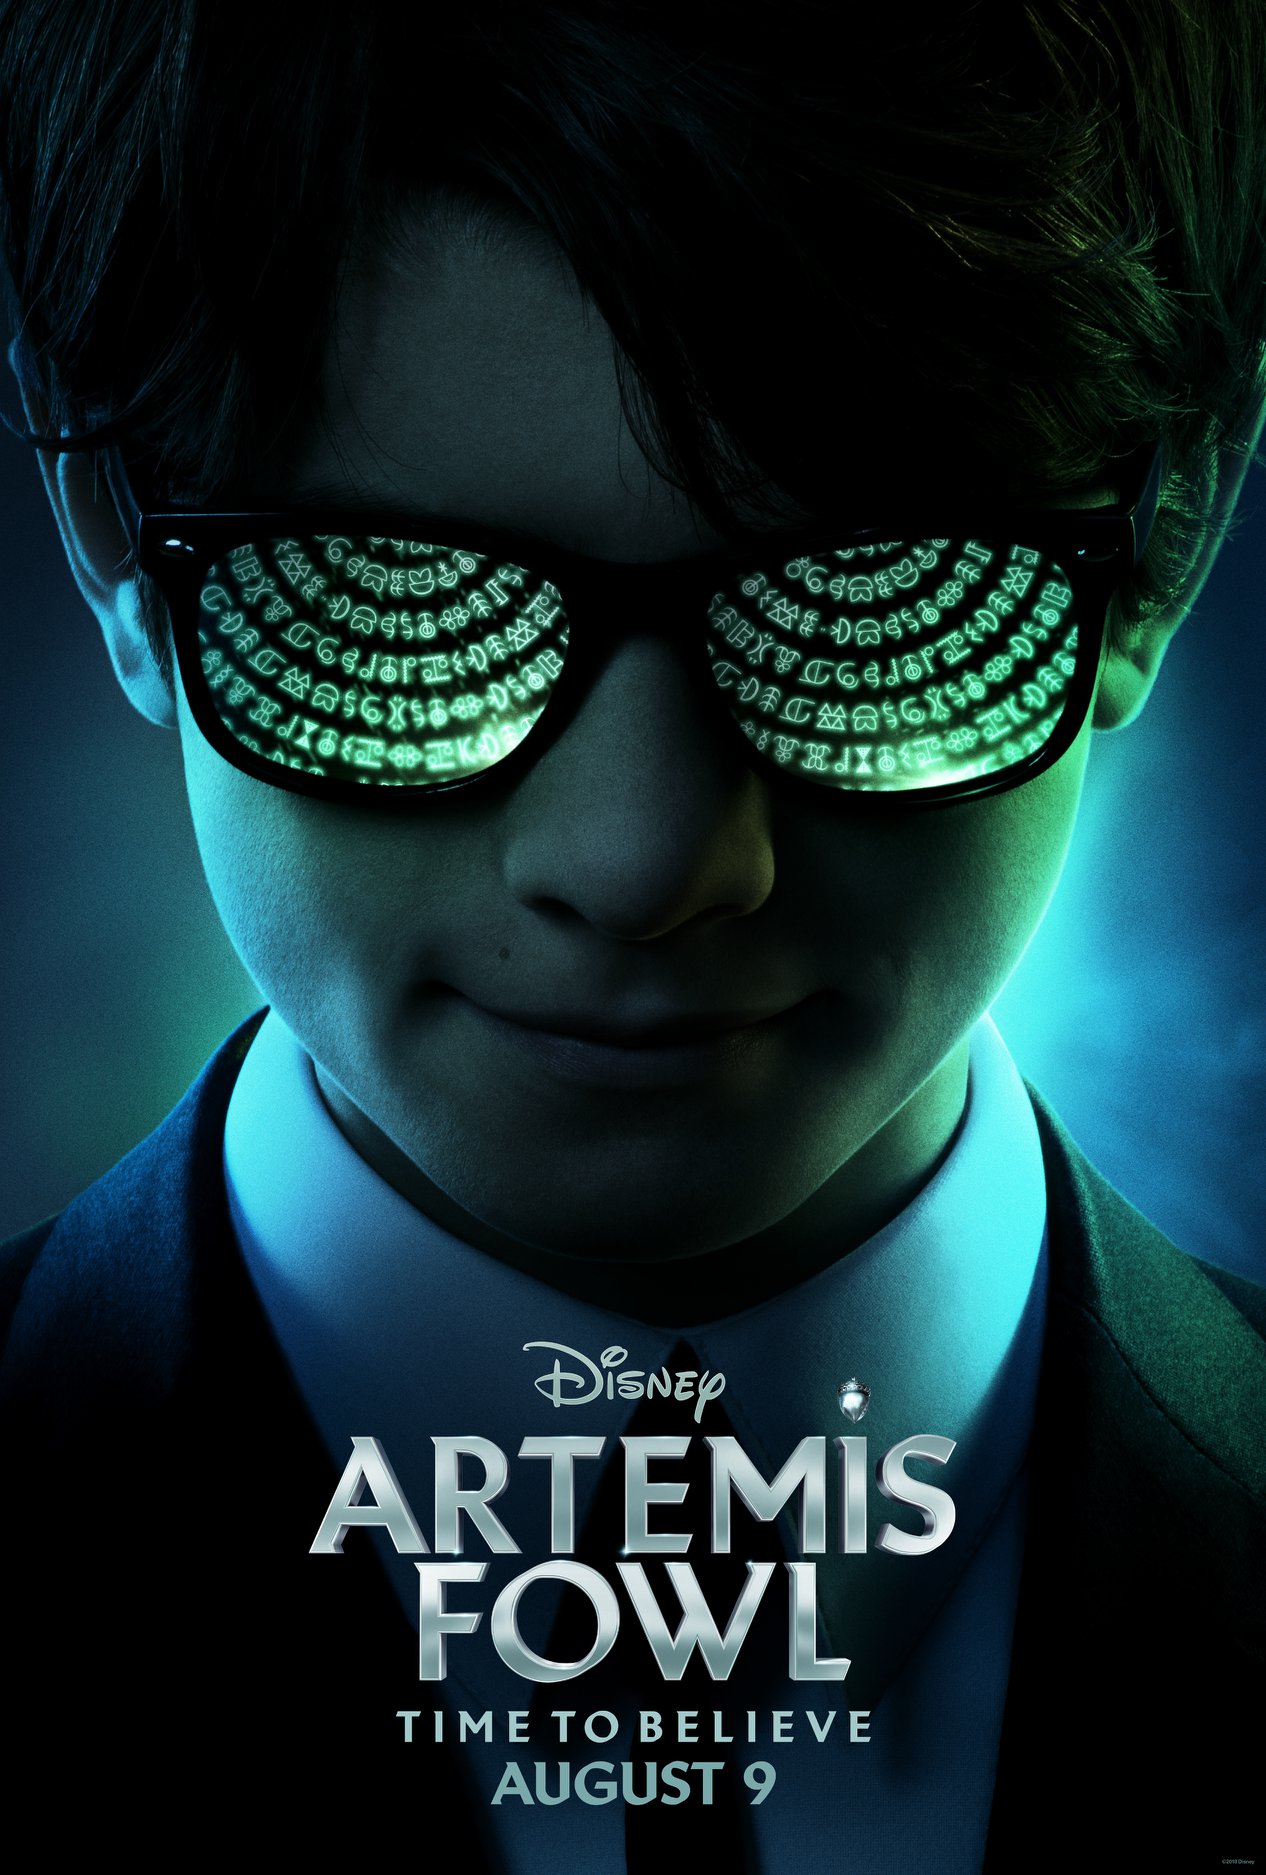 Disney’s Artemis Fowl Teaser Trailer